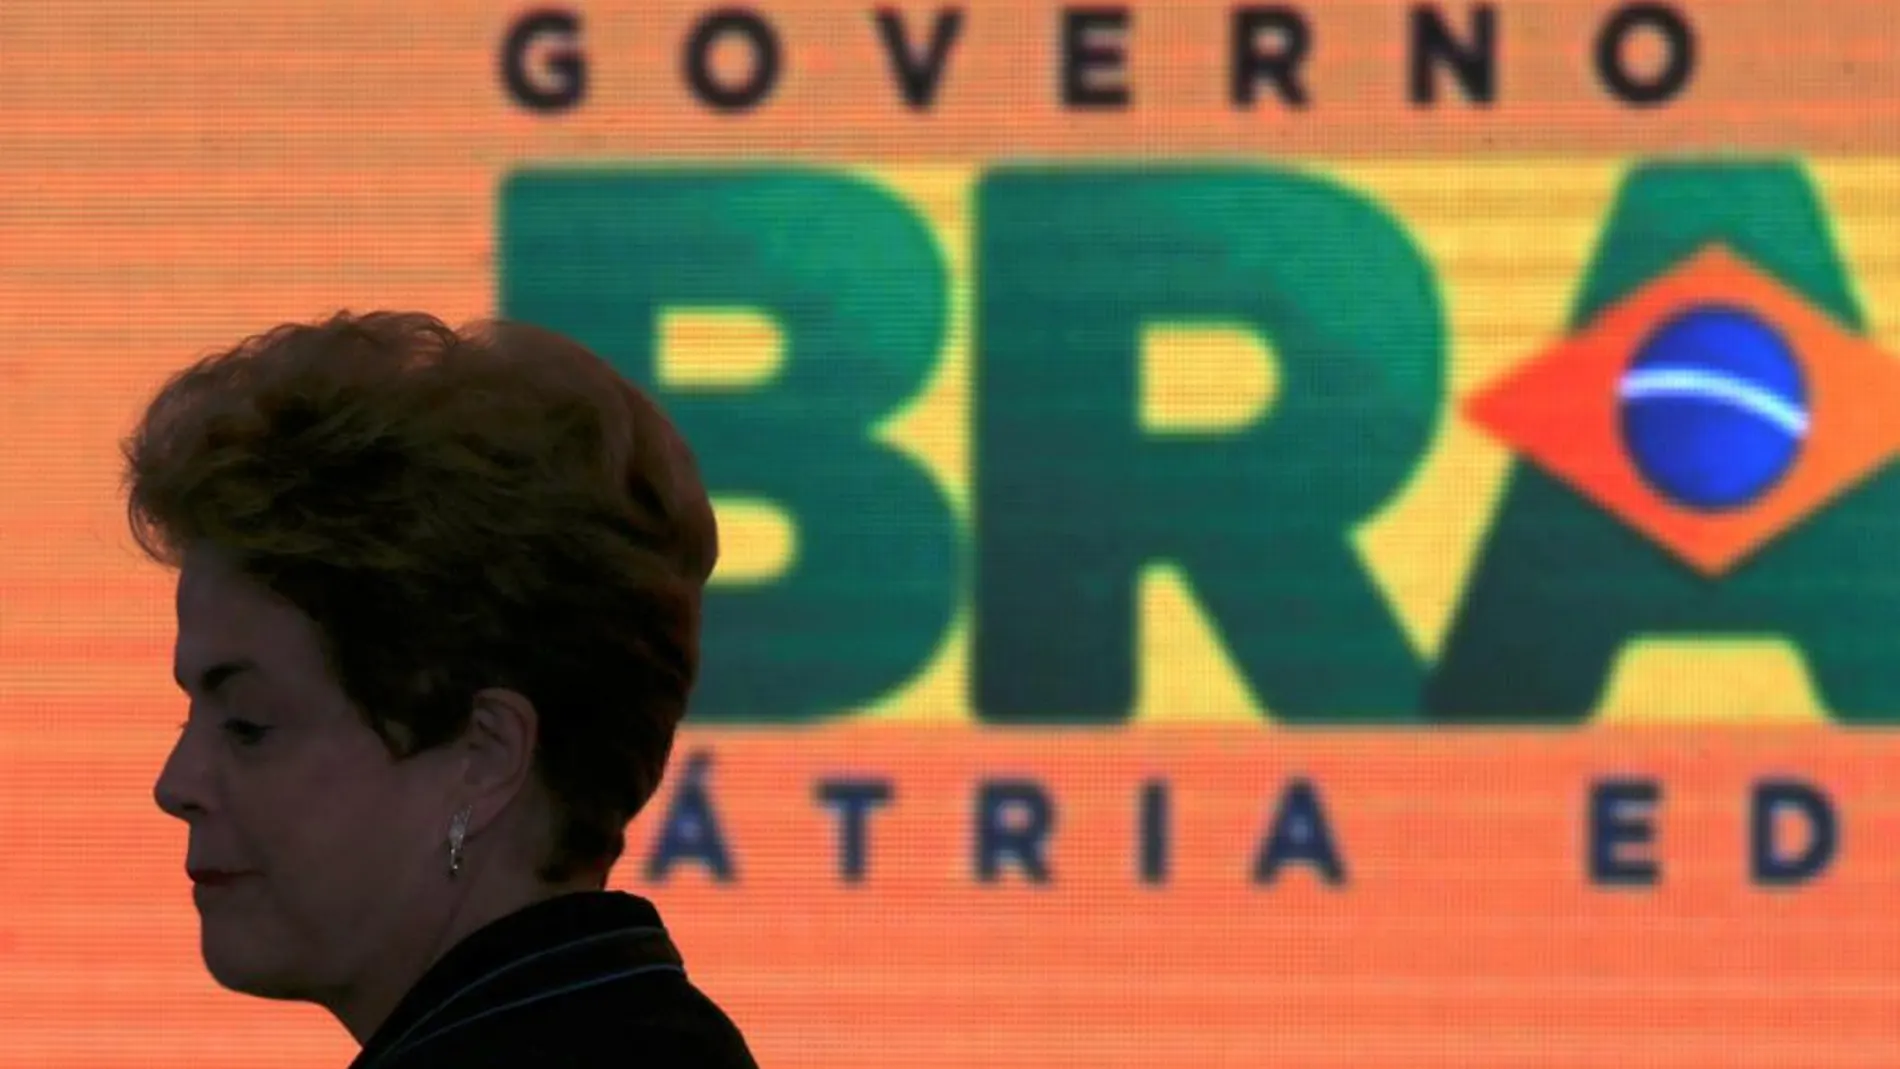 La presidenta brasileña Dilma Rousseff